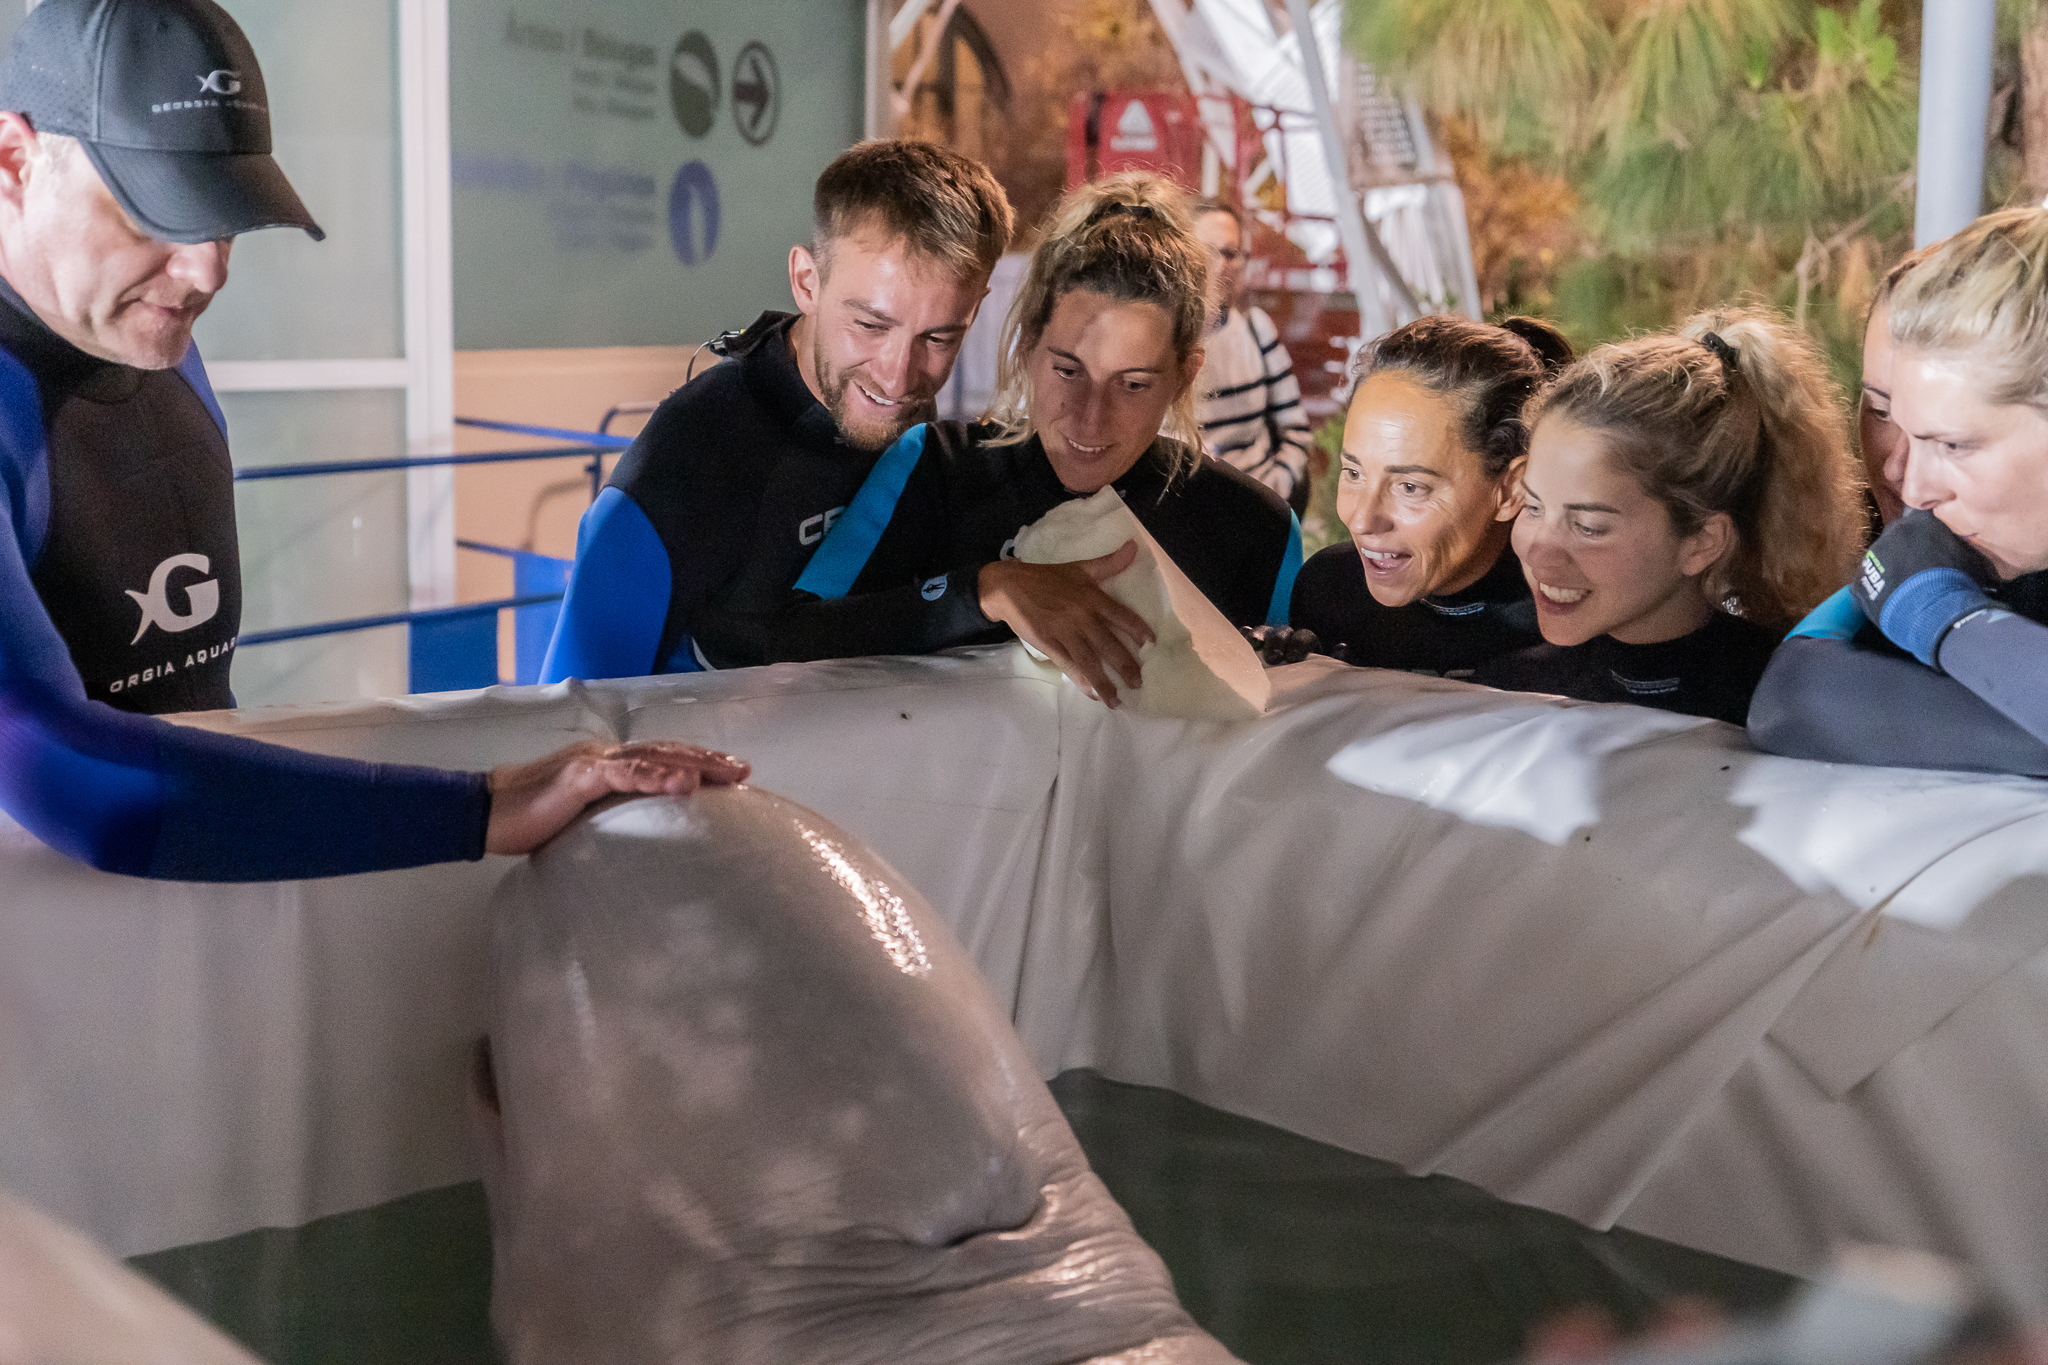 Two beluga whales rescued from Ukrainian aquarium evacuated to Spain 4